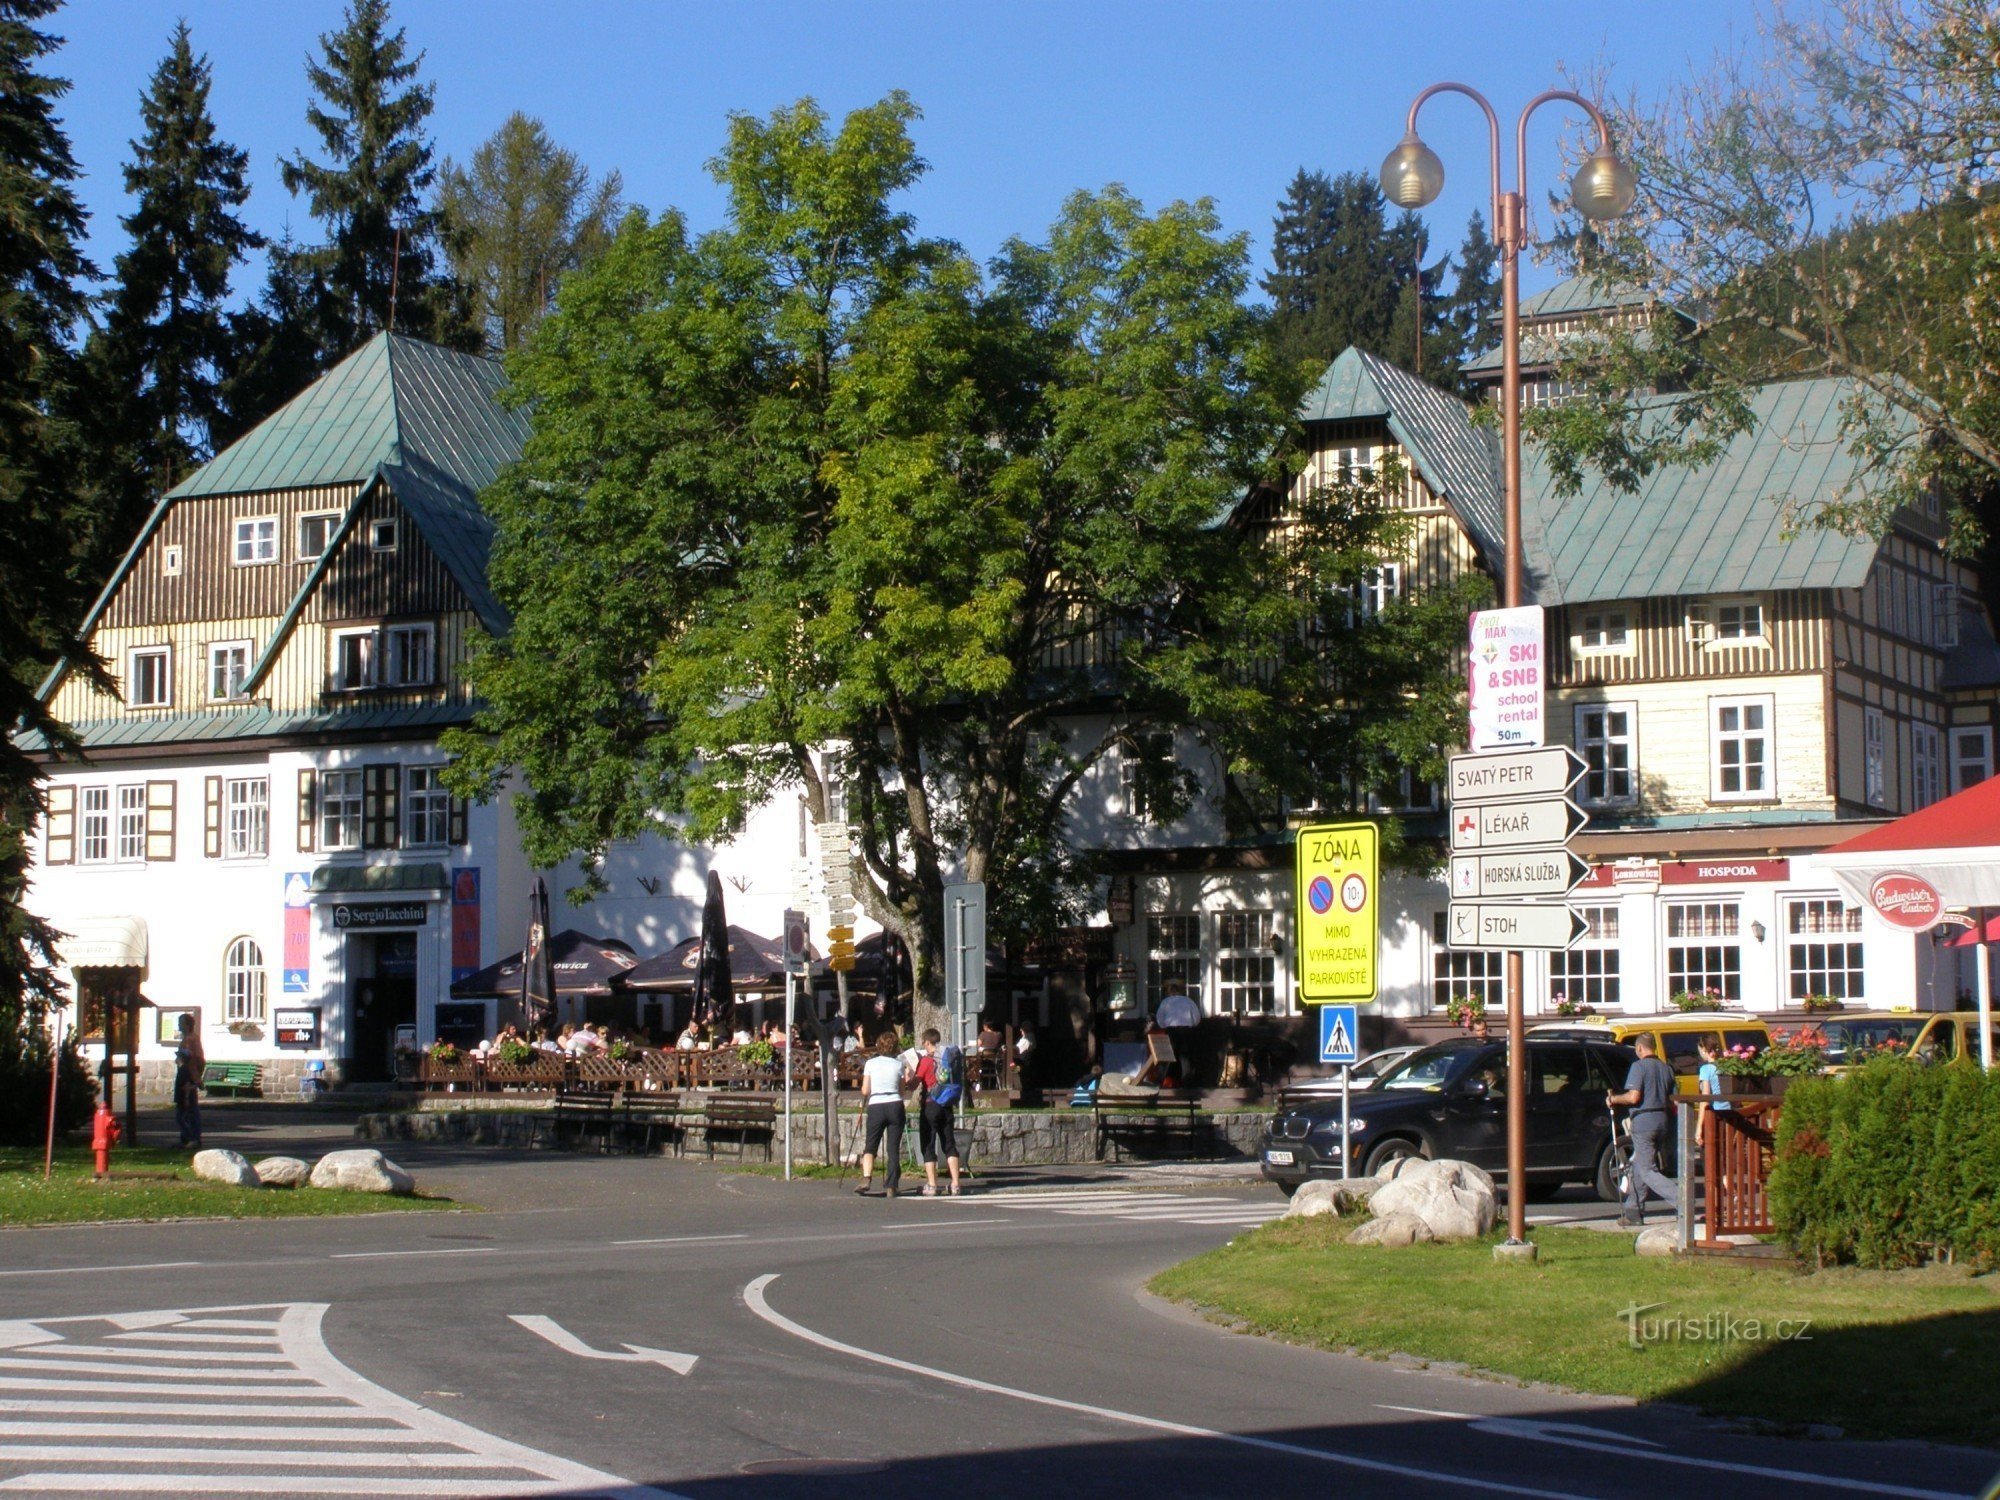 Špindlerův Mlýn - the main tourist signpost